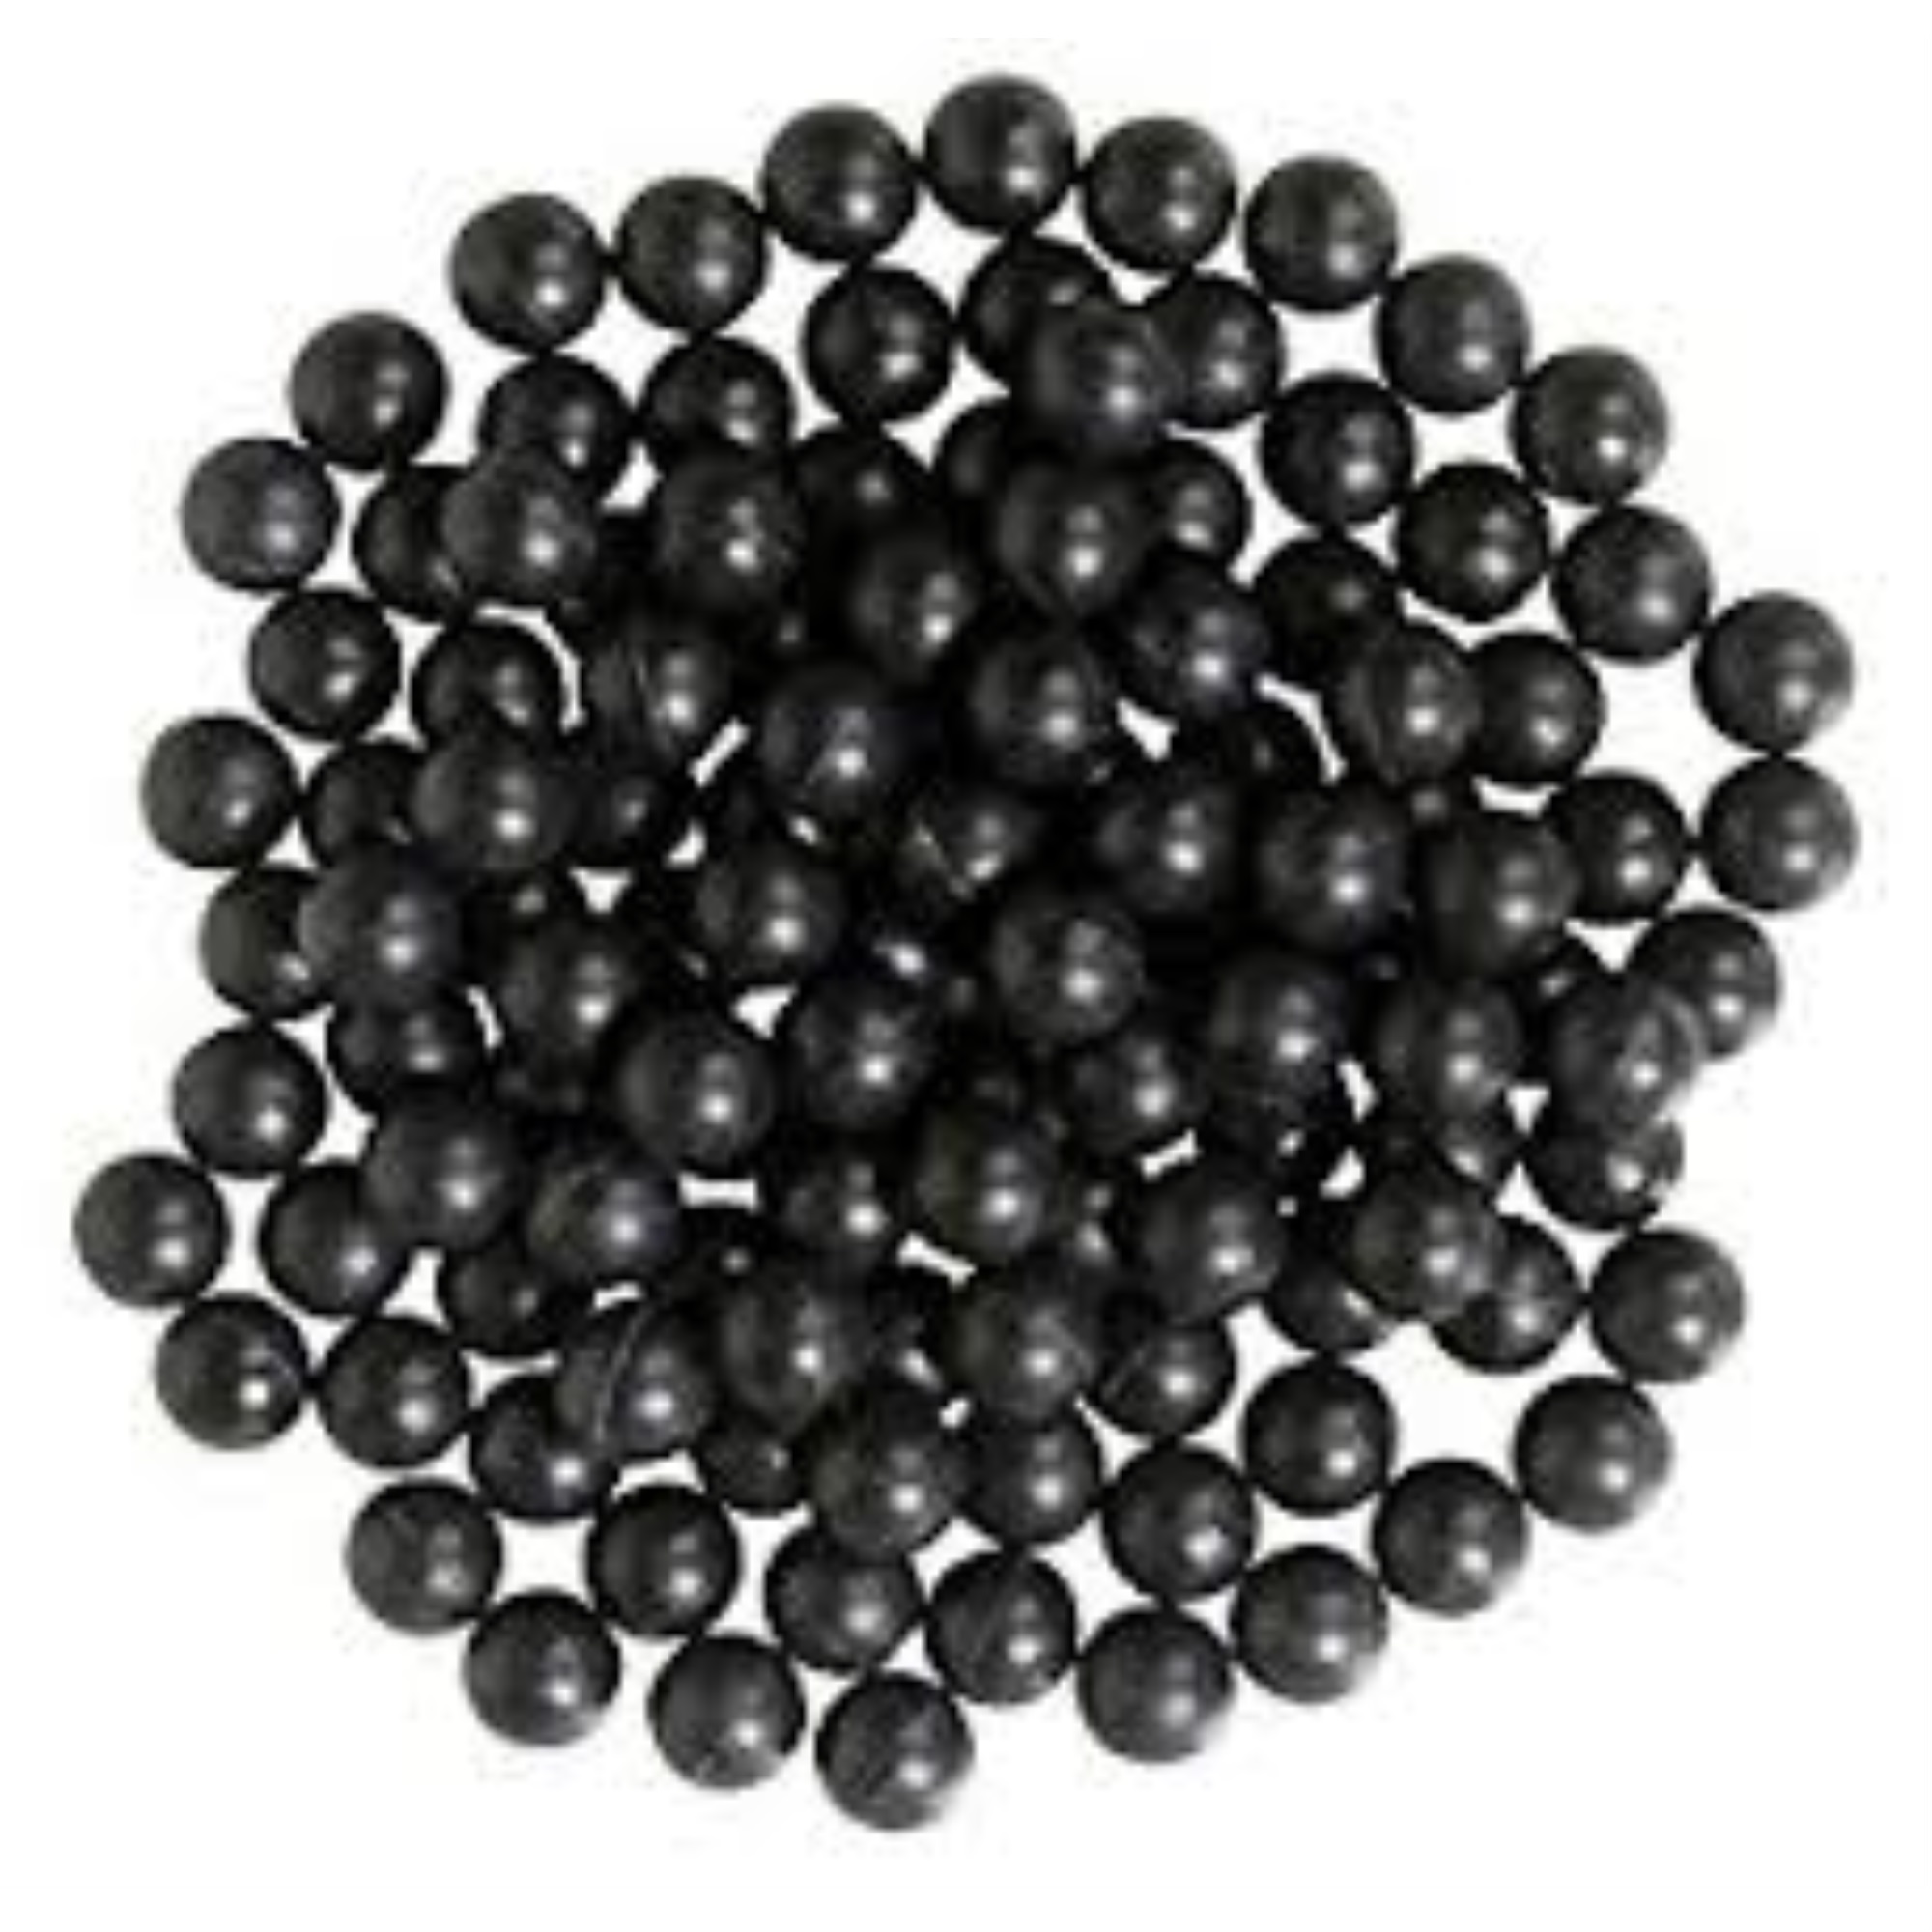 I&I Sports .43 caliber Reusable Rubber Balls Paintball 100ct Bag Black 11mm zball -XP7054A